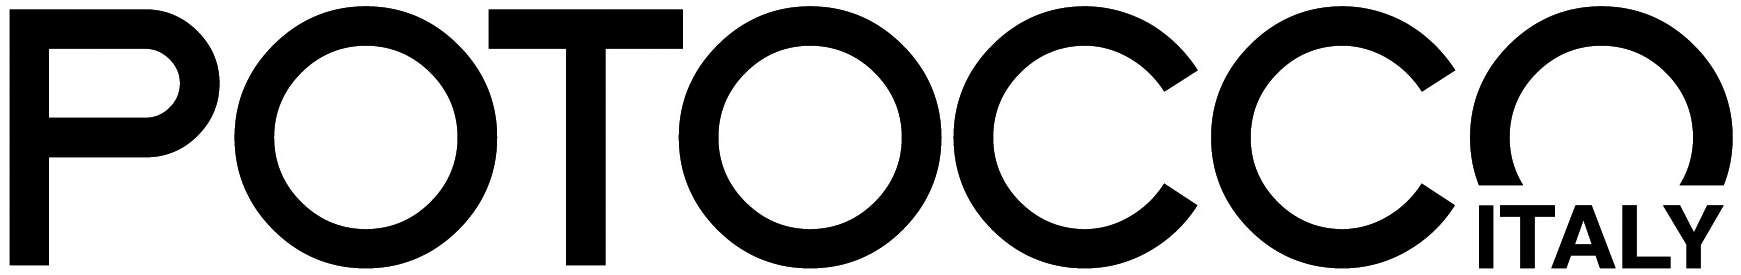 Potocco Logo - Potocco dealer - International delivery